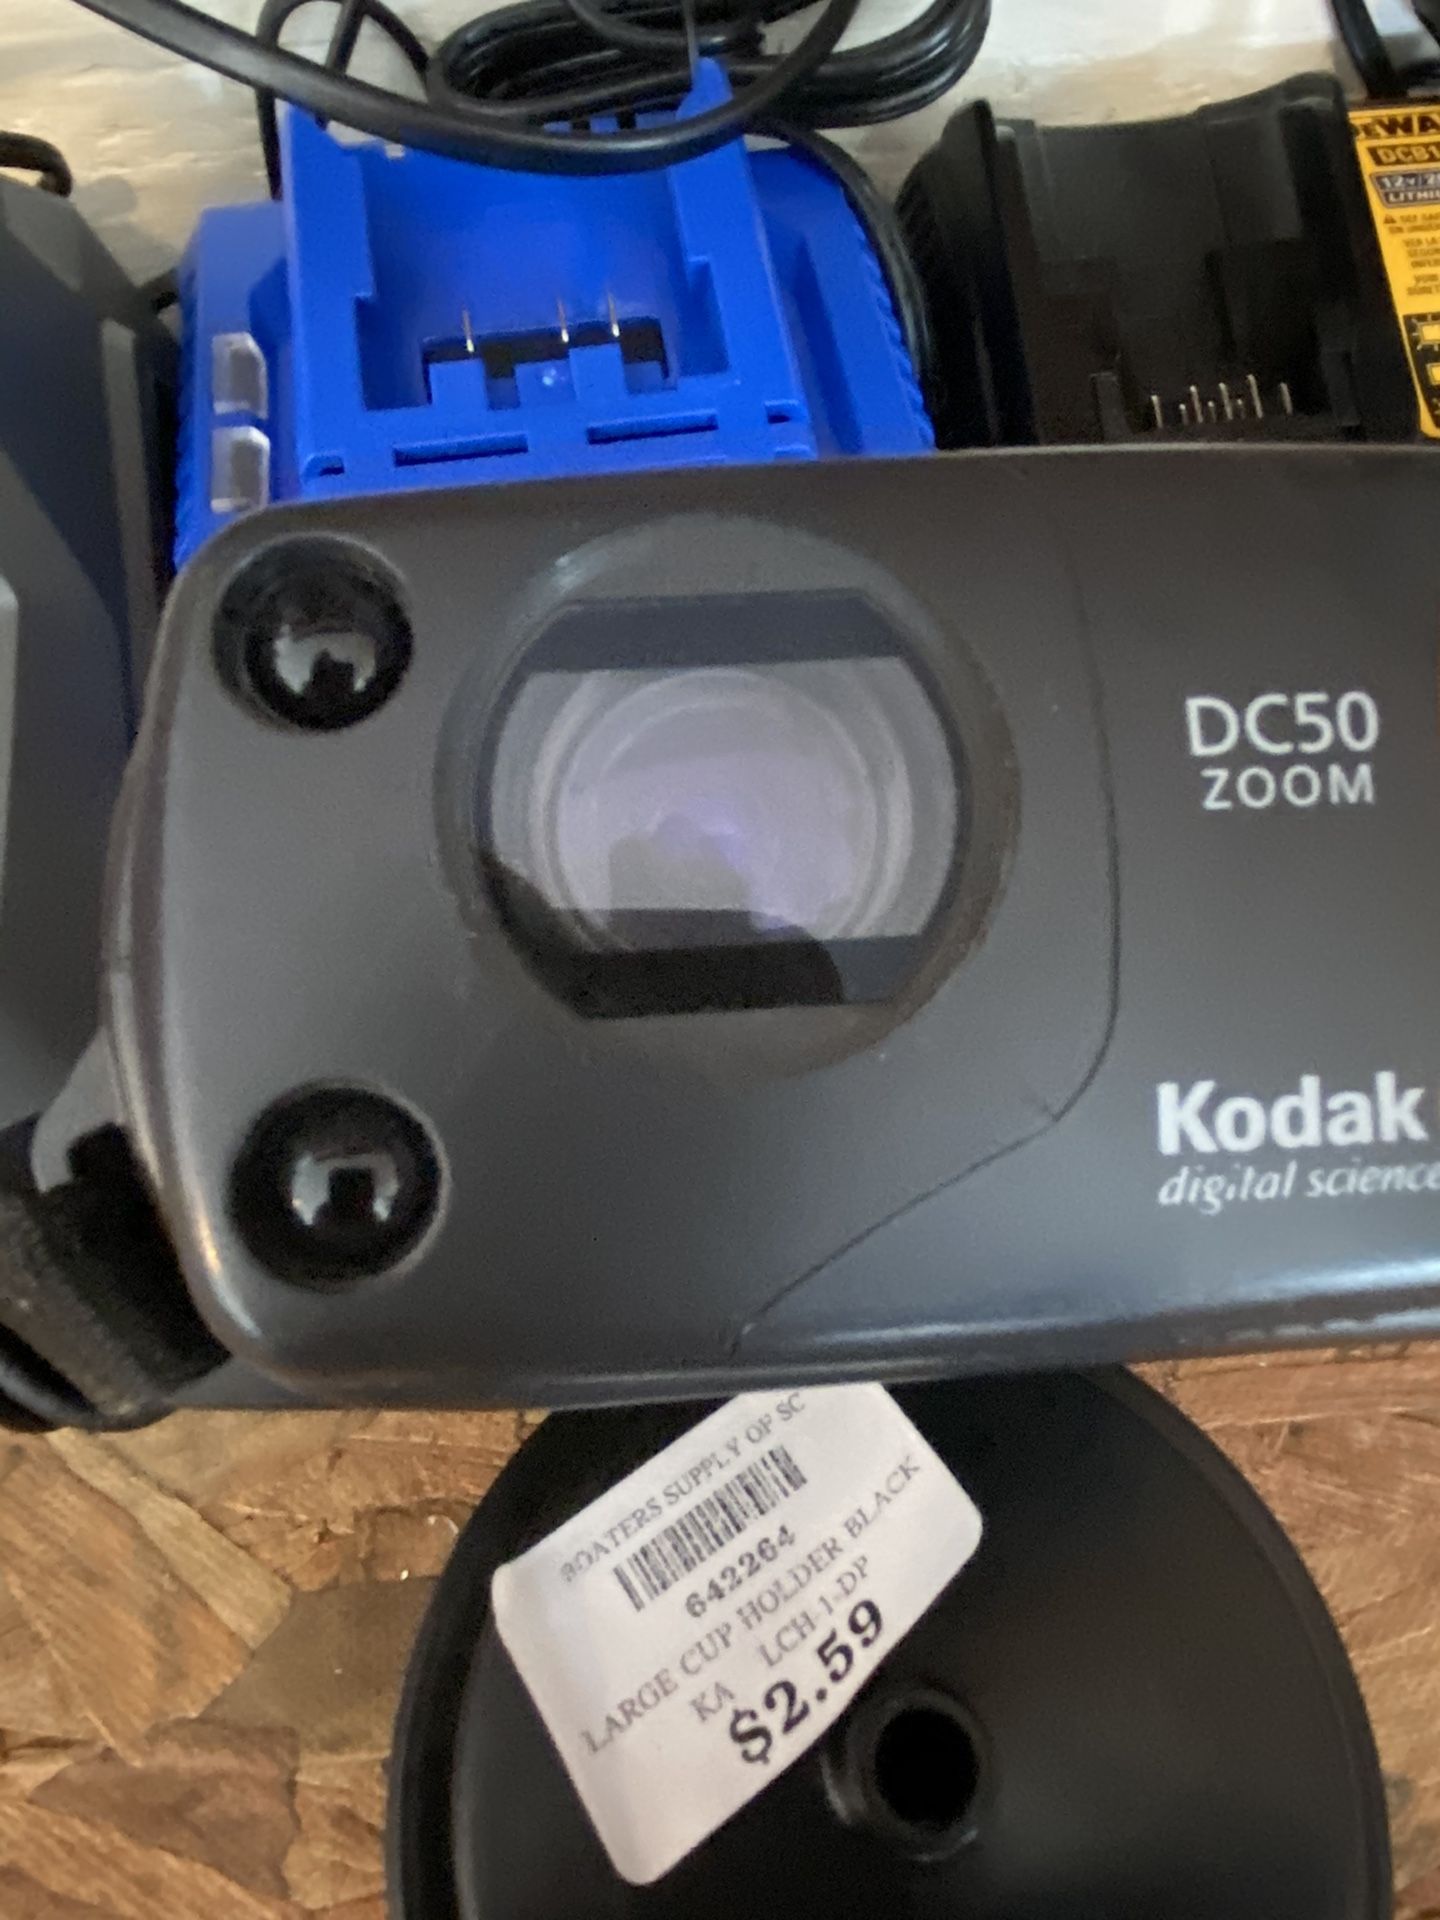 Kodak Science Digital Zoom Camera